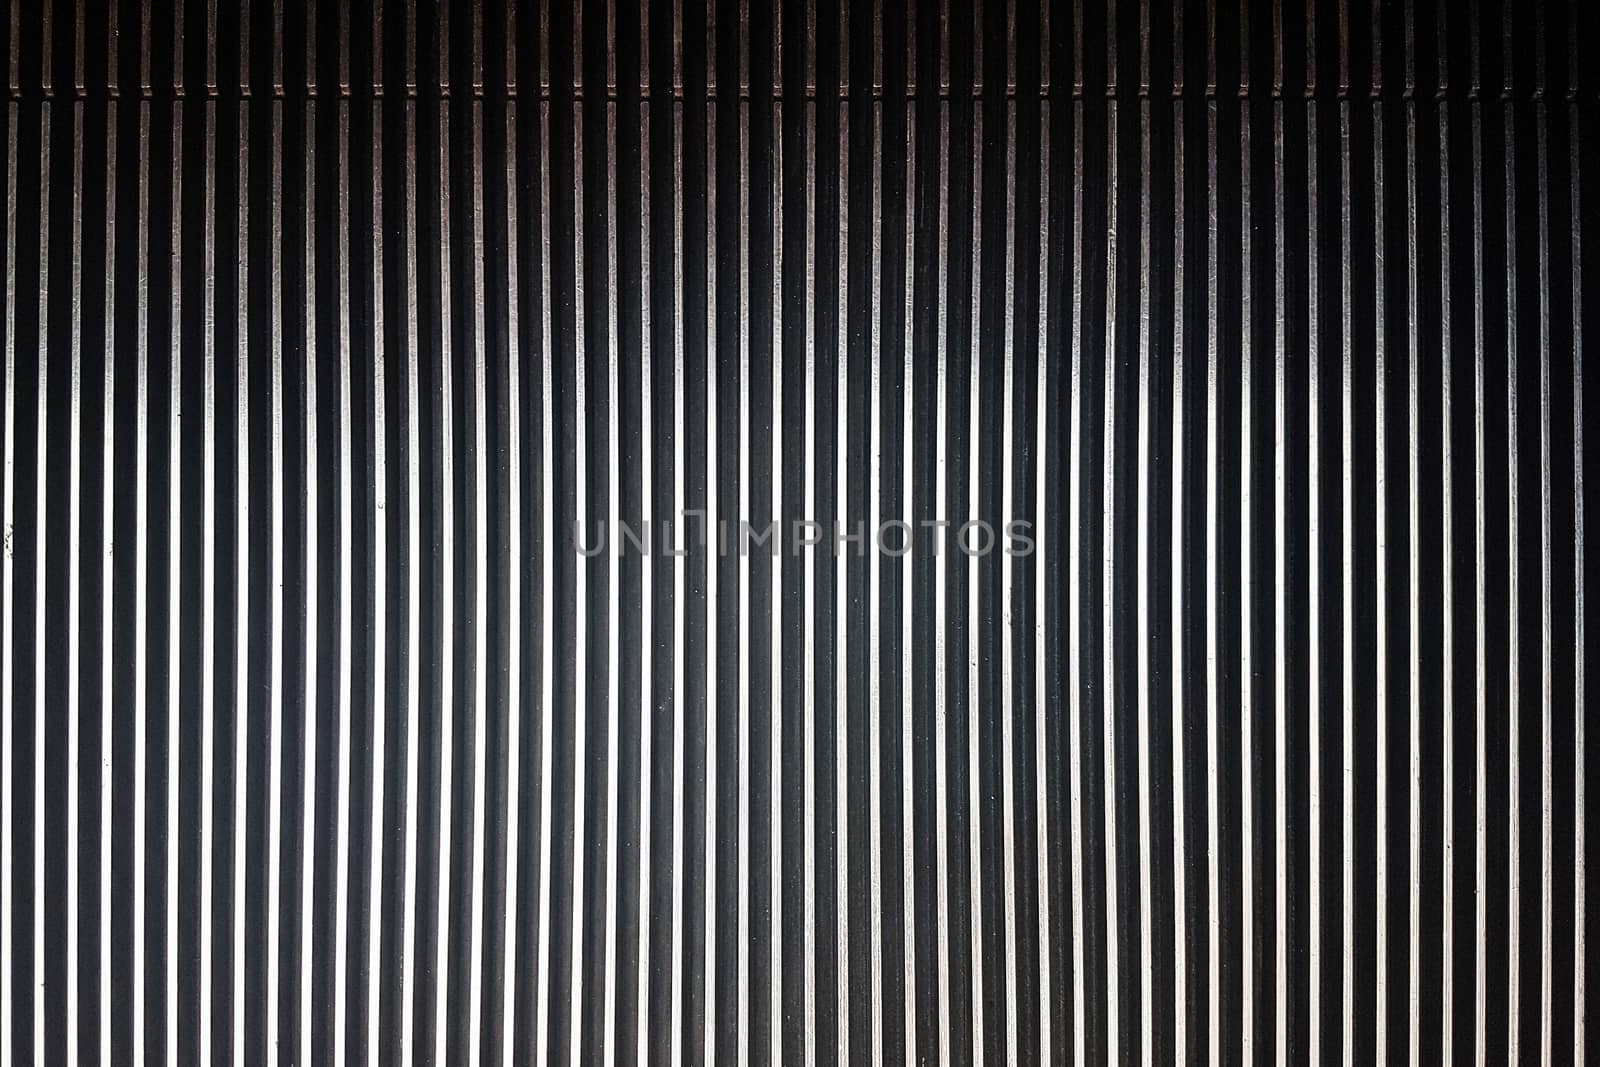 Escalator surface background by wdnet_studio